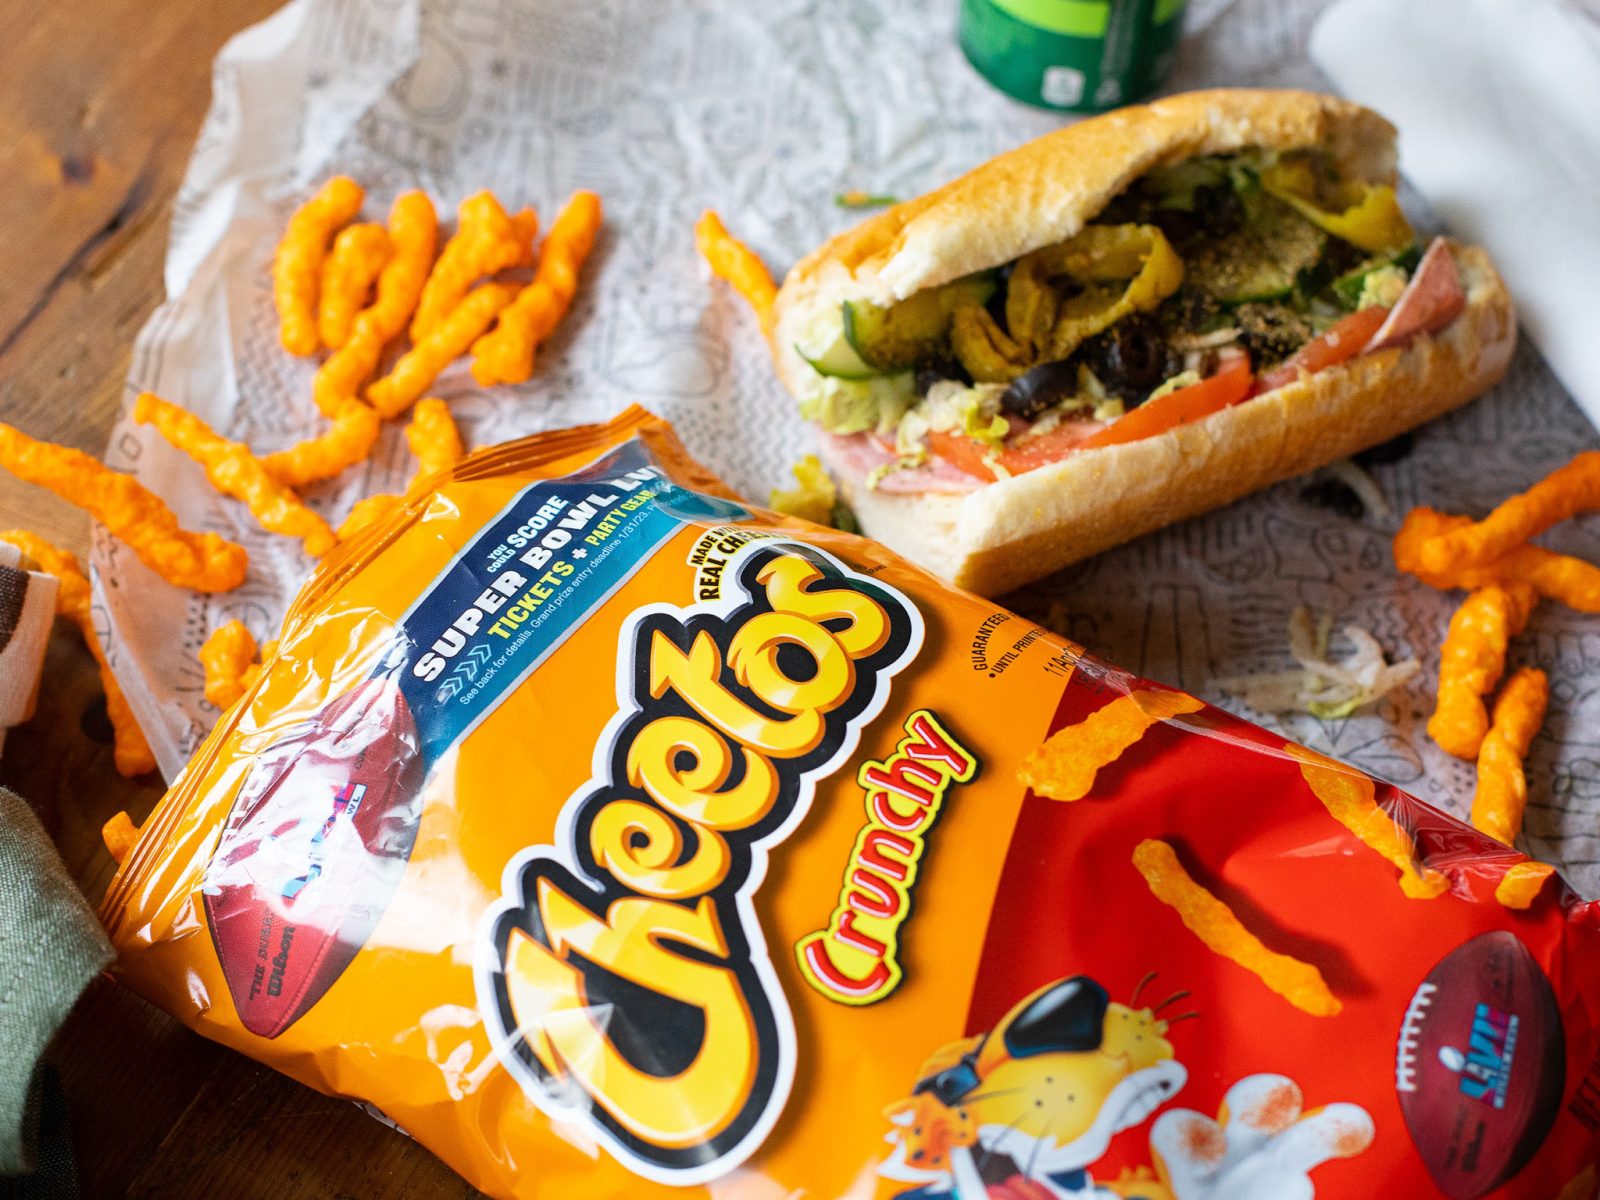 Get Cheetos As Low As $2.99 Per Bag At Kroger